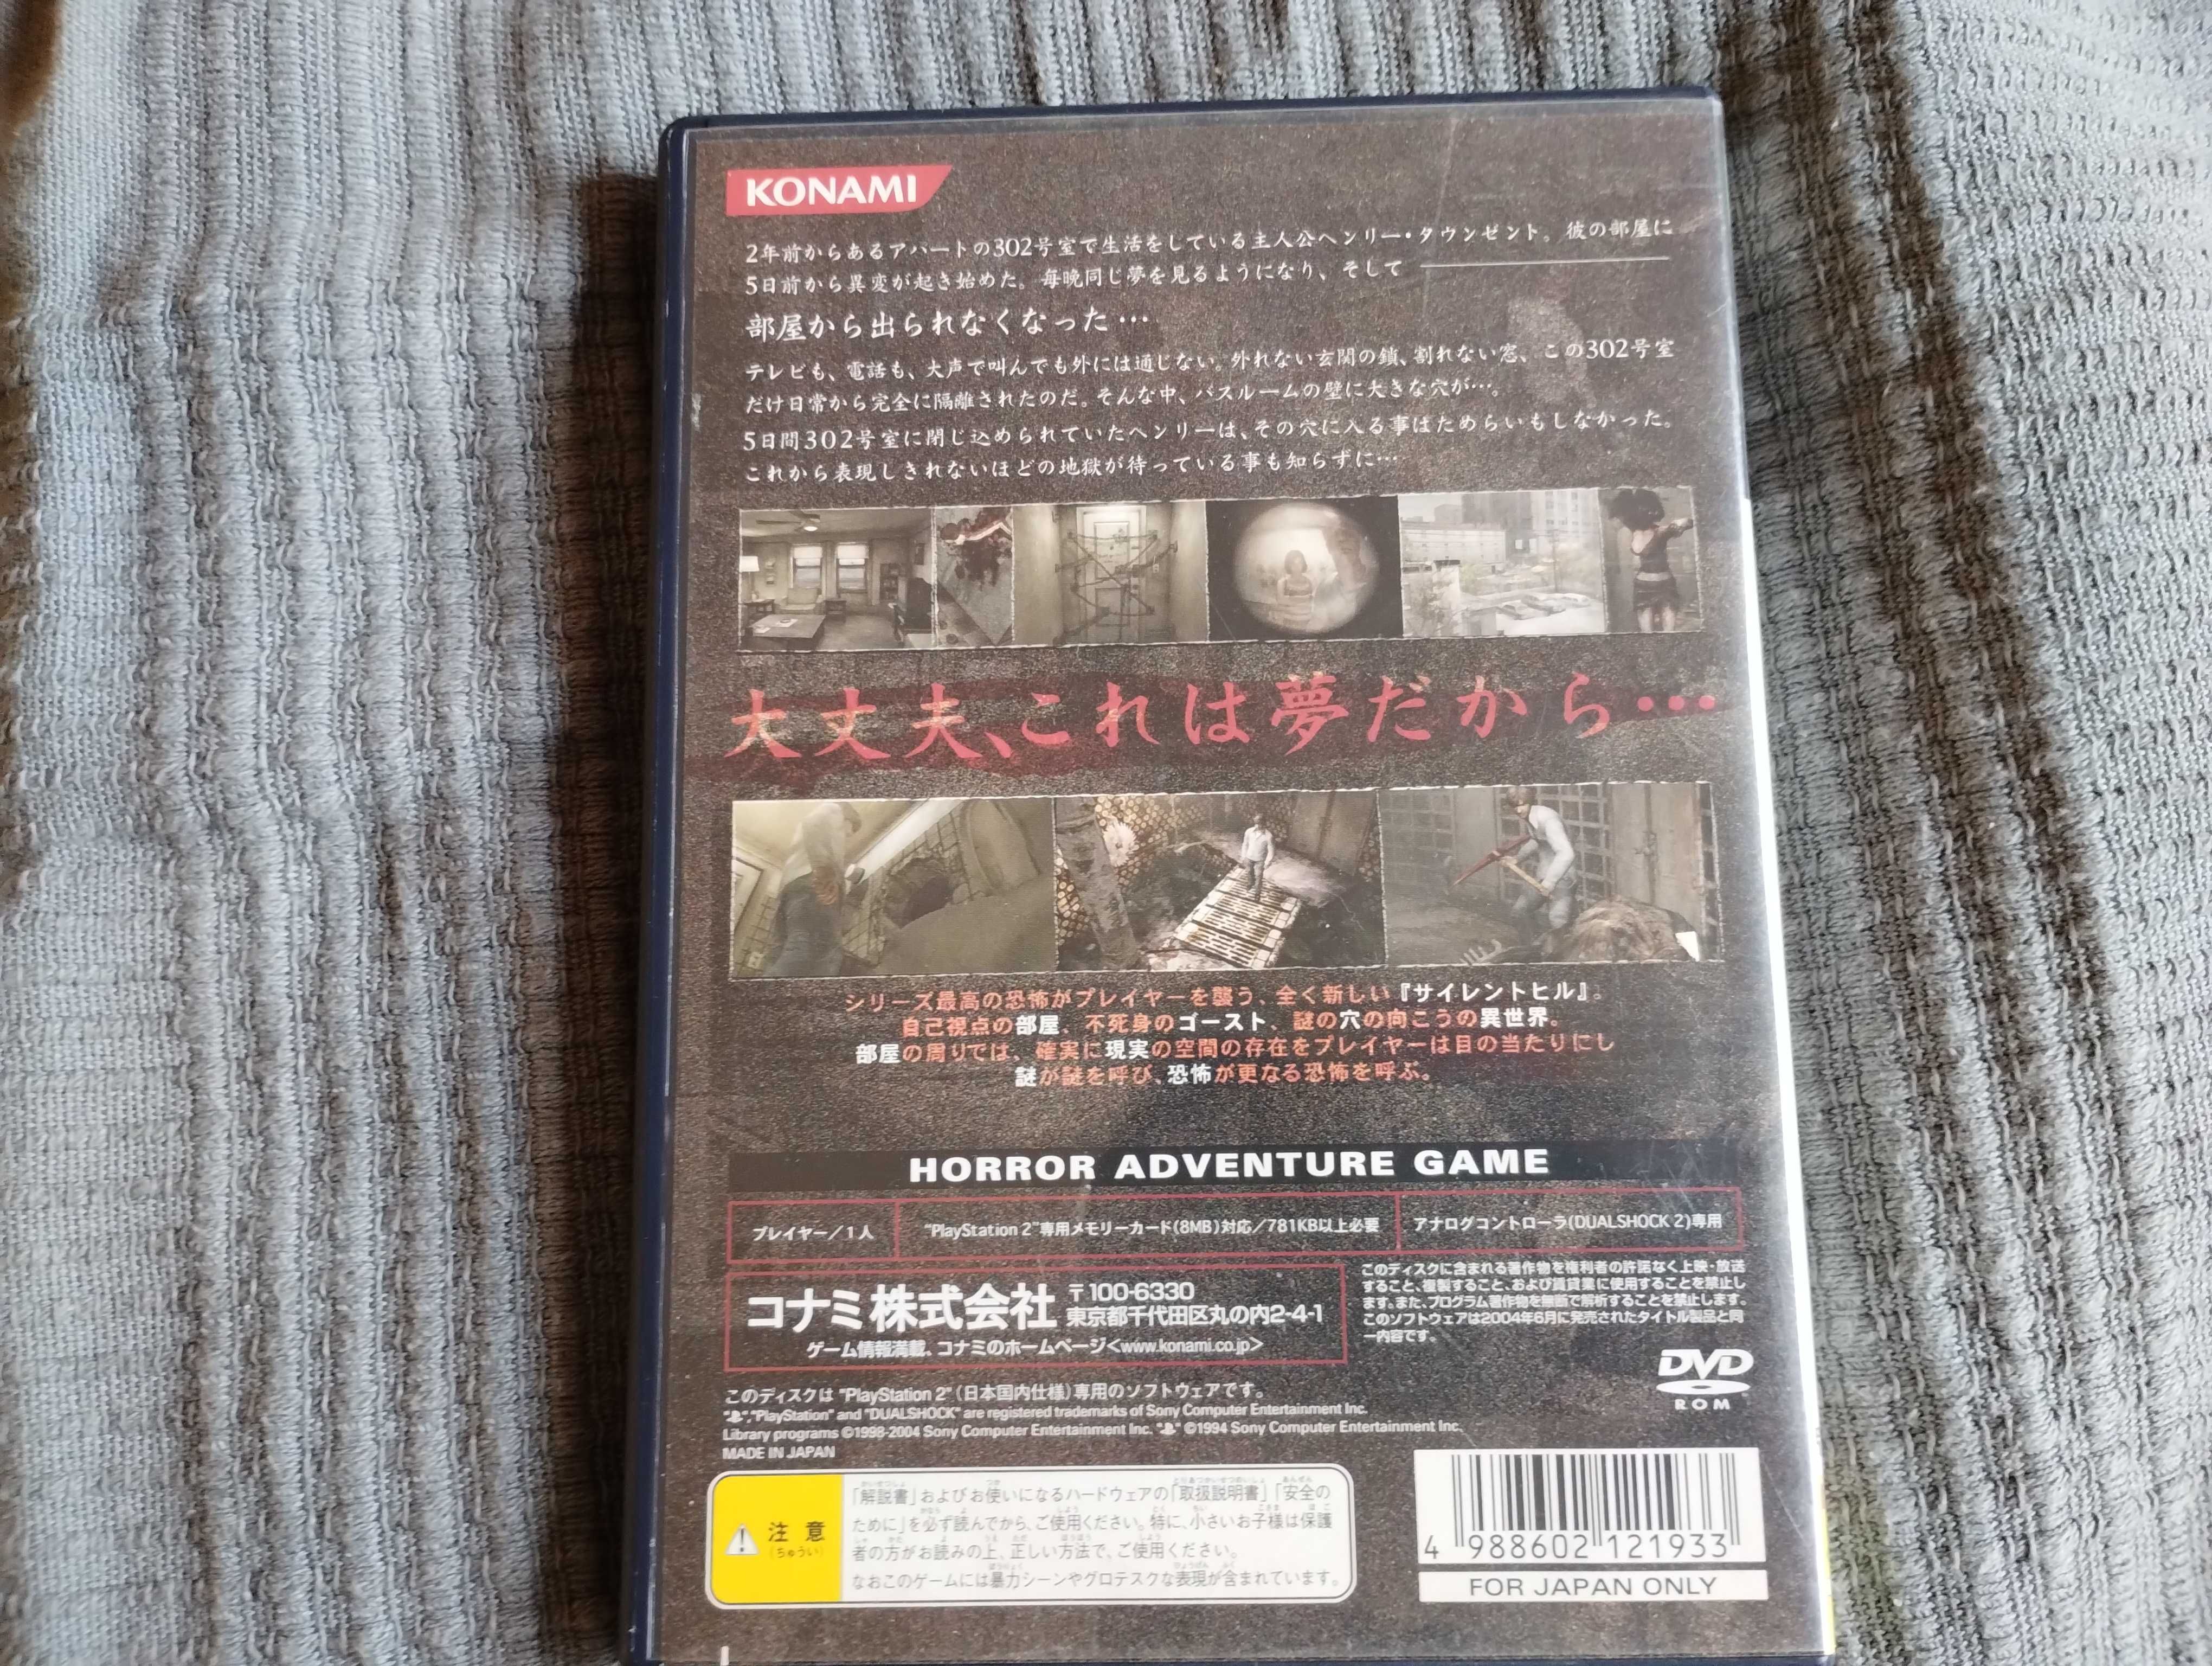 Gra Silent Hill 4 The Room na PS2 (NTSC-J)